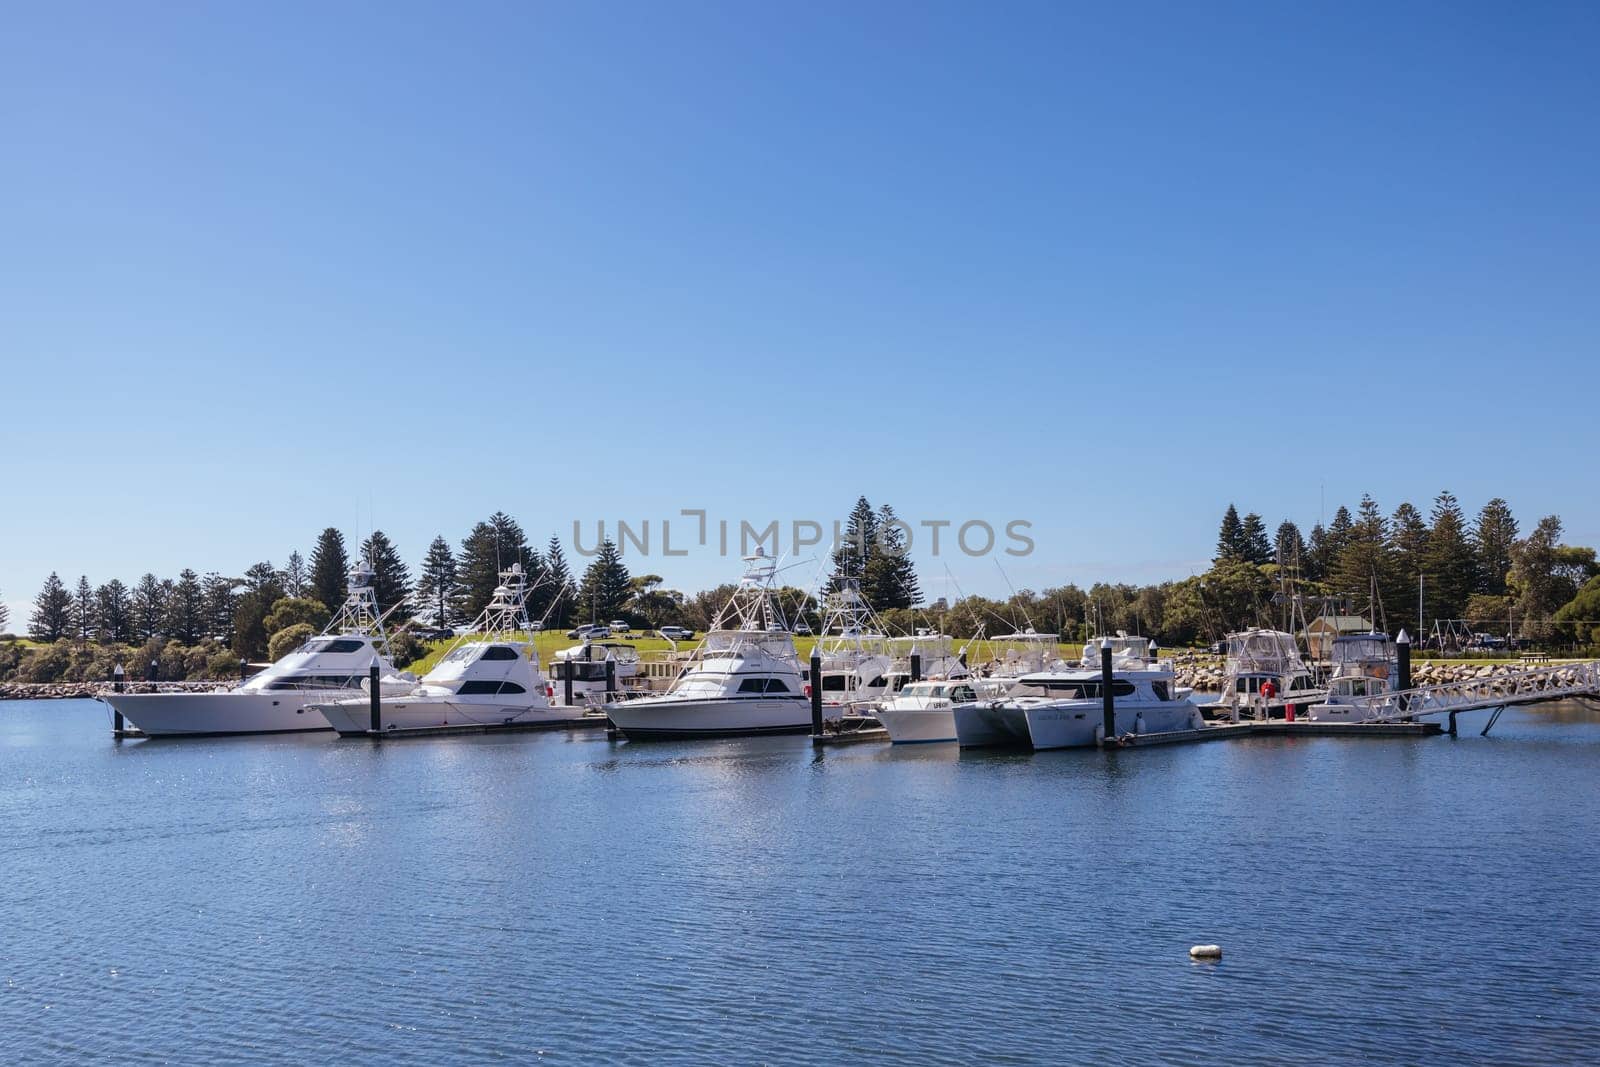 Bermagui Wharf and Marina in Australia by FiledIMAGE